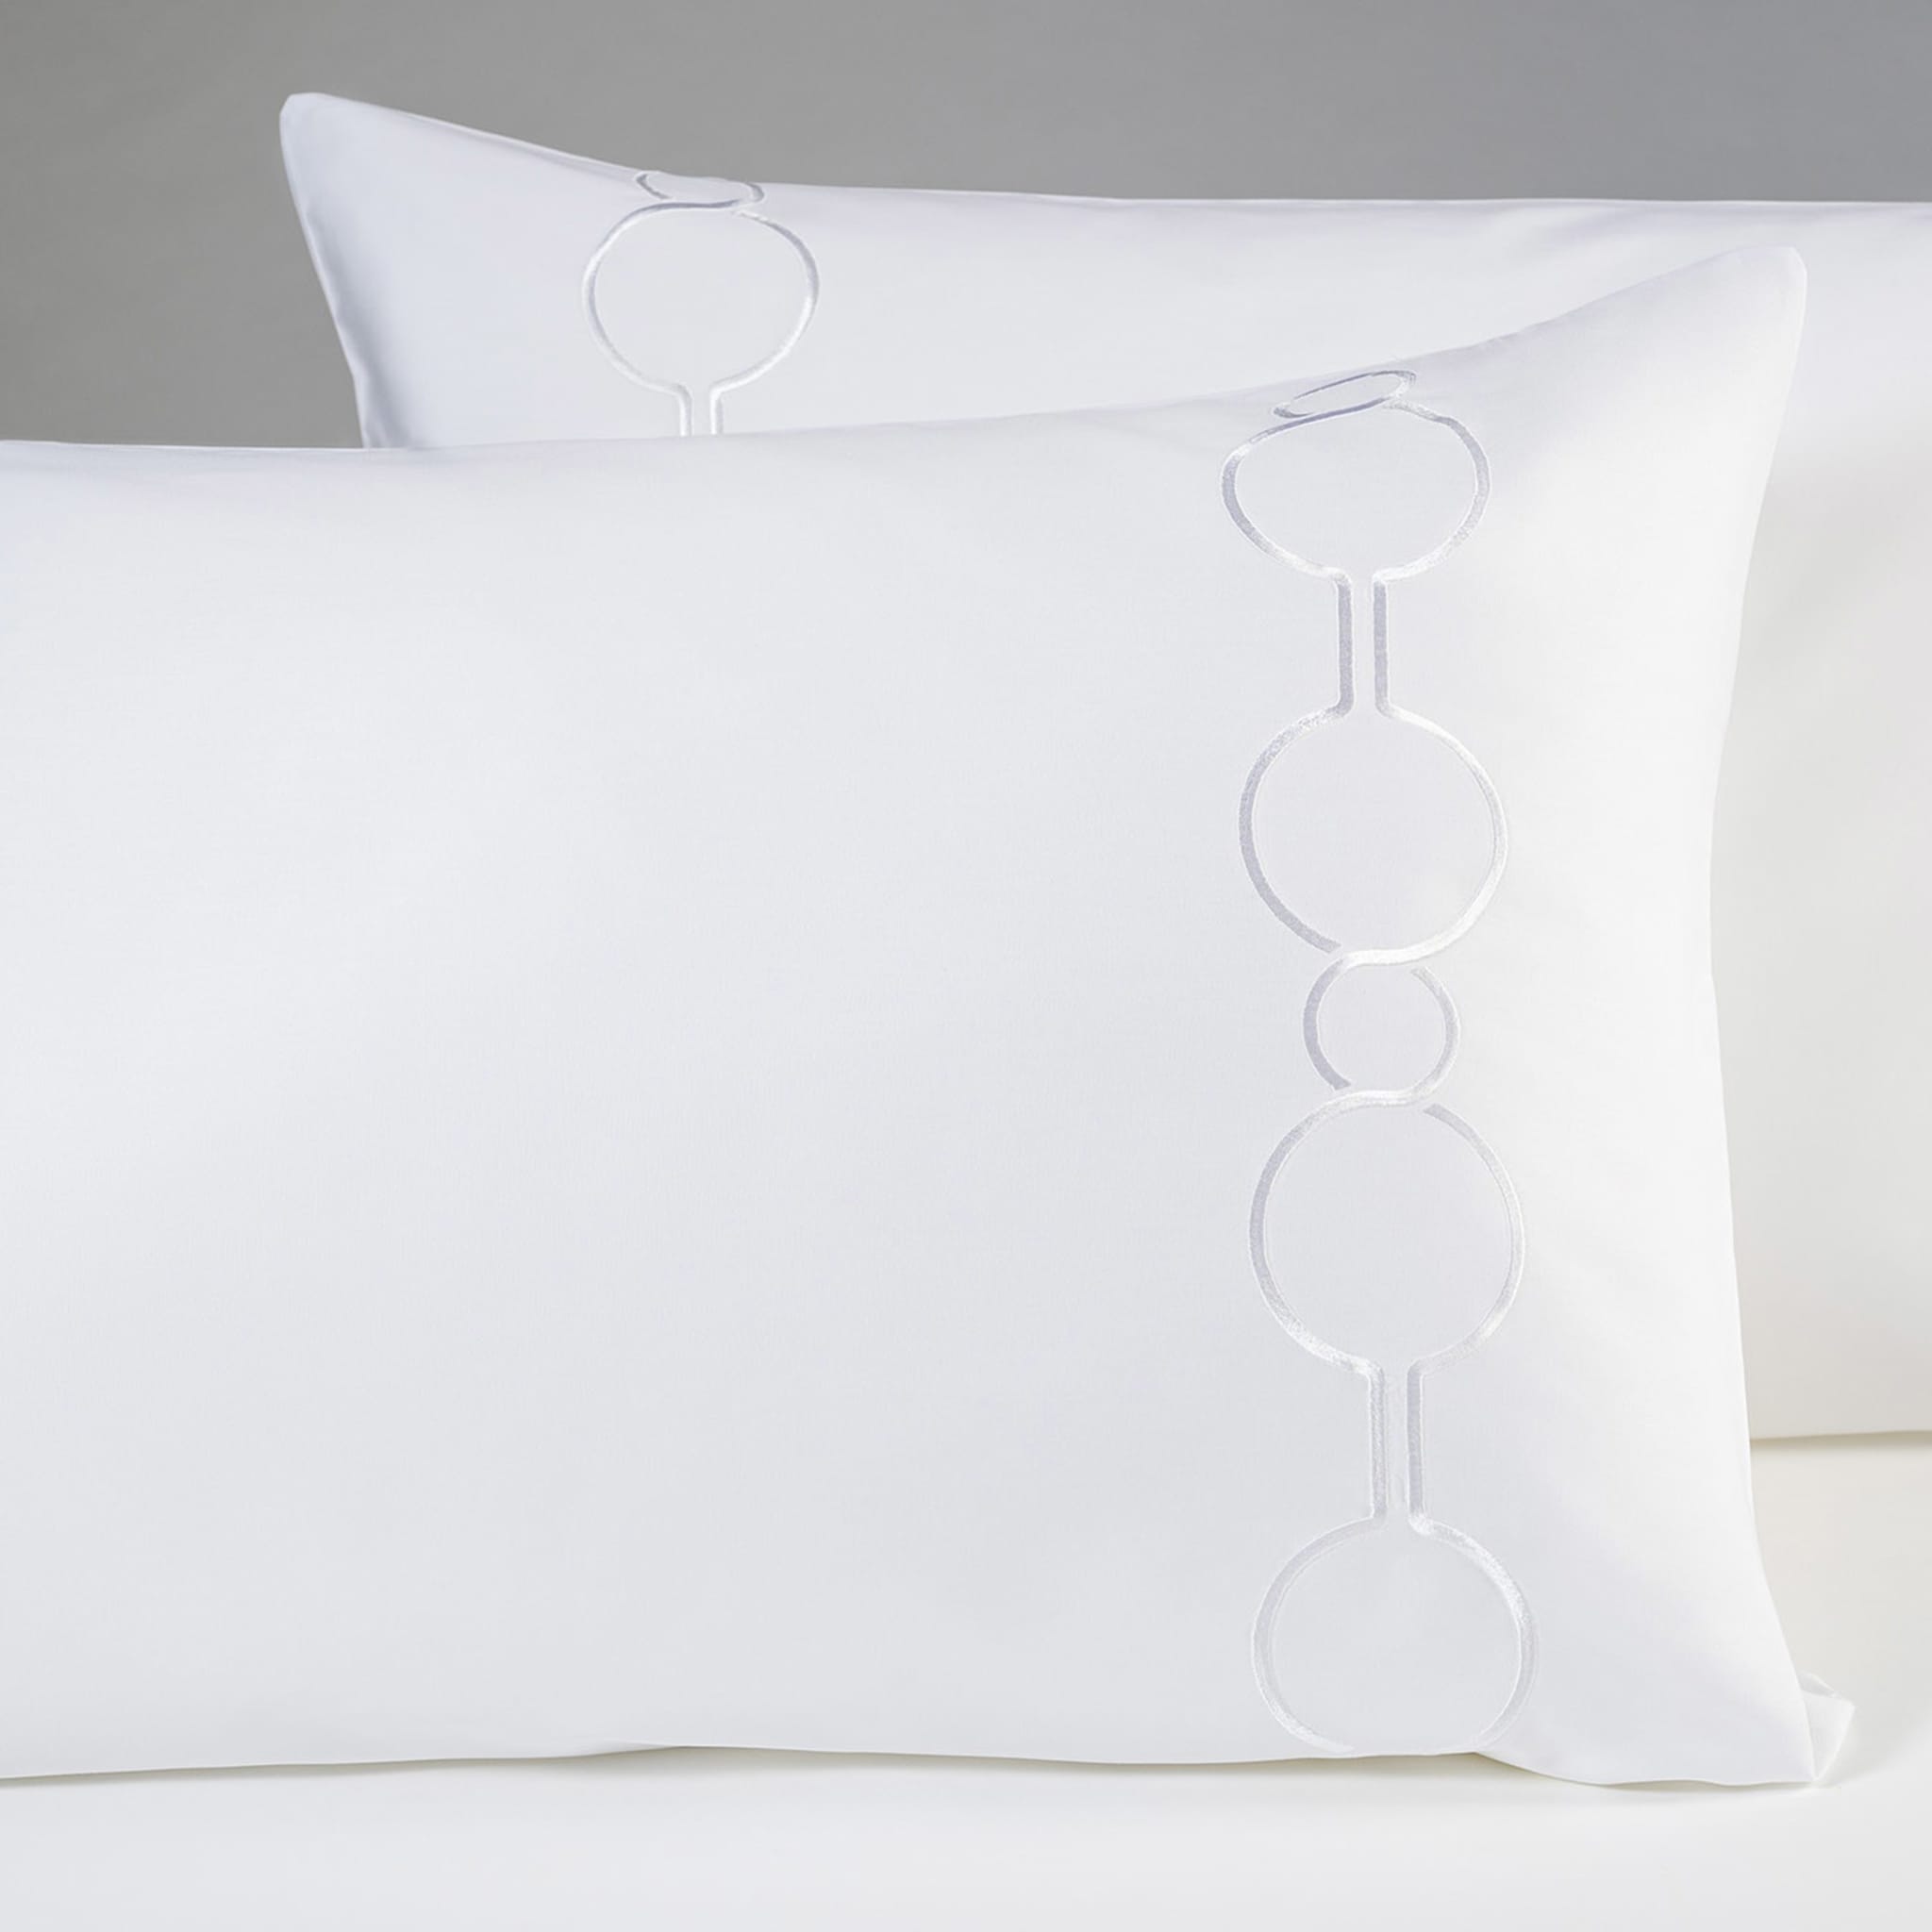 Shangri-La White Set of 2 Pillowcases - Alternative view 2